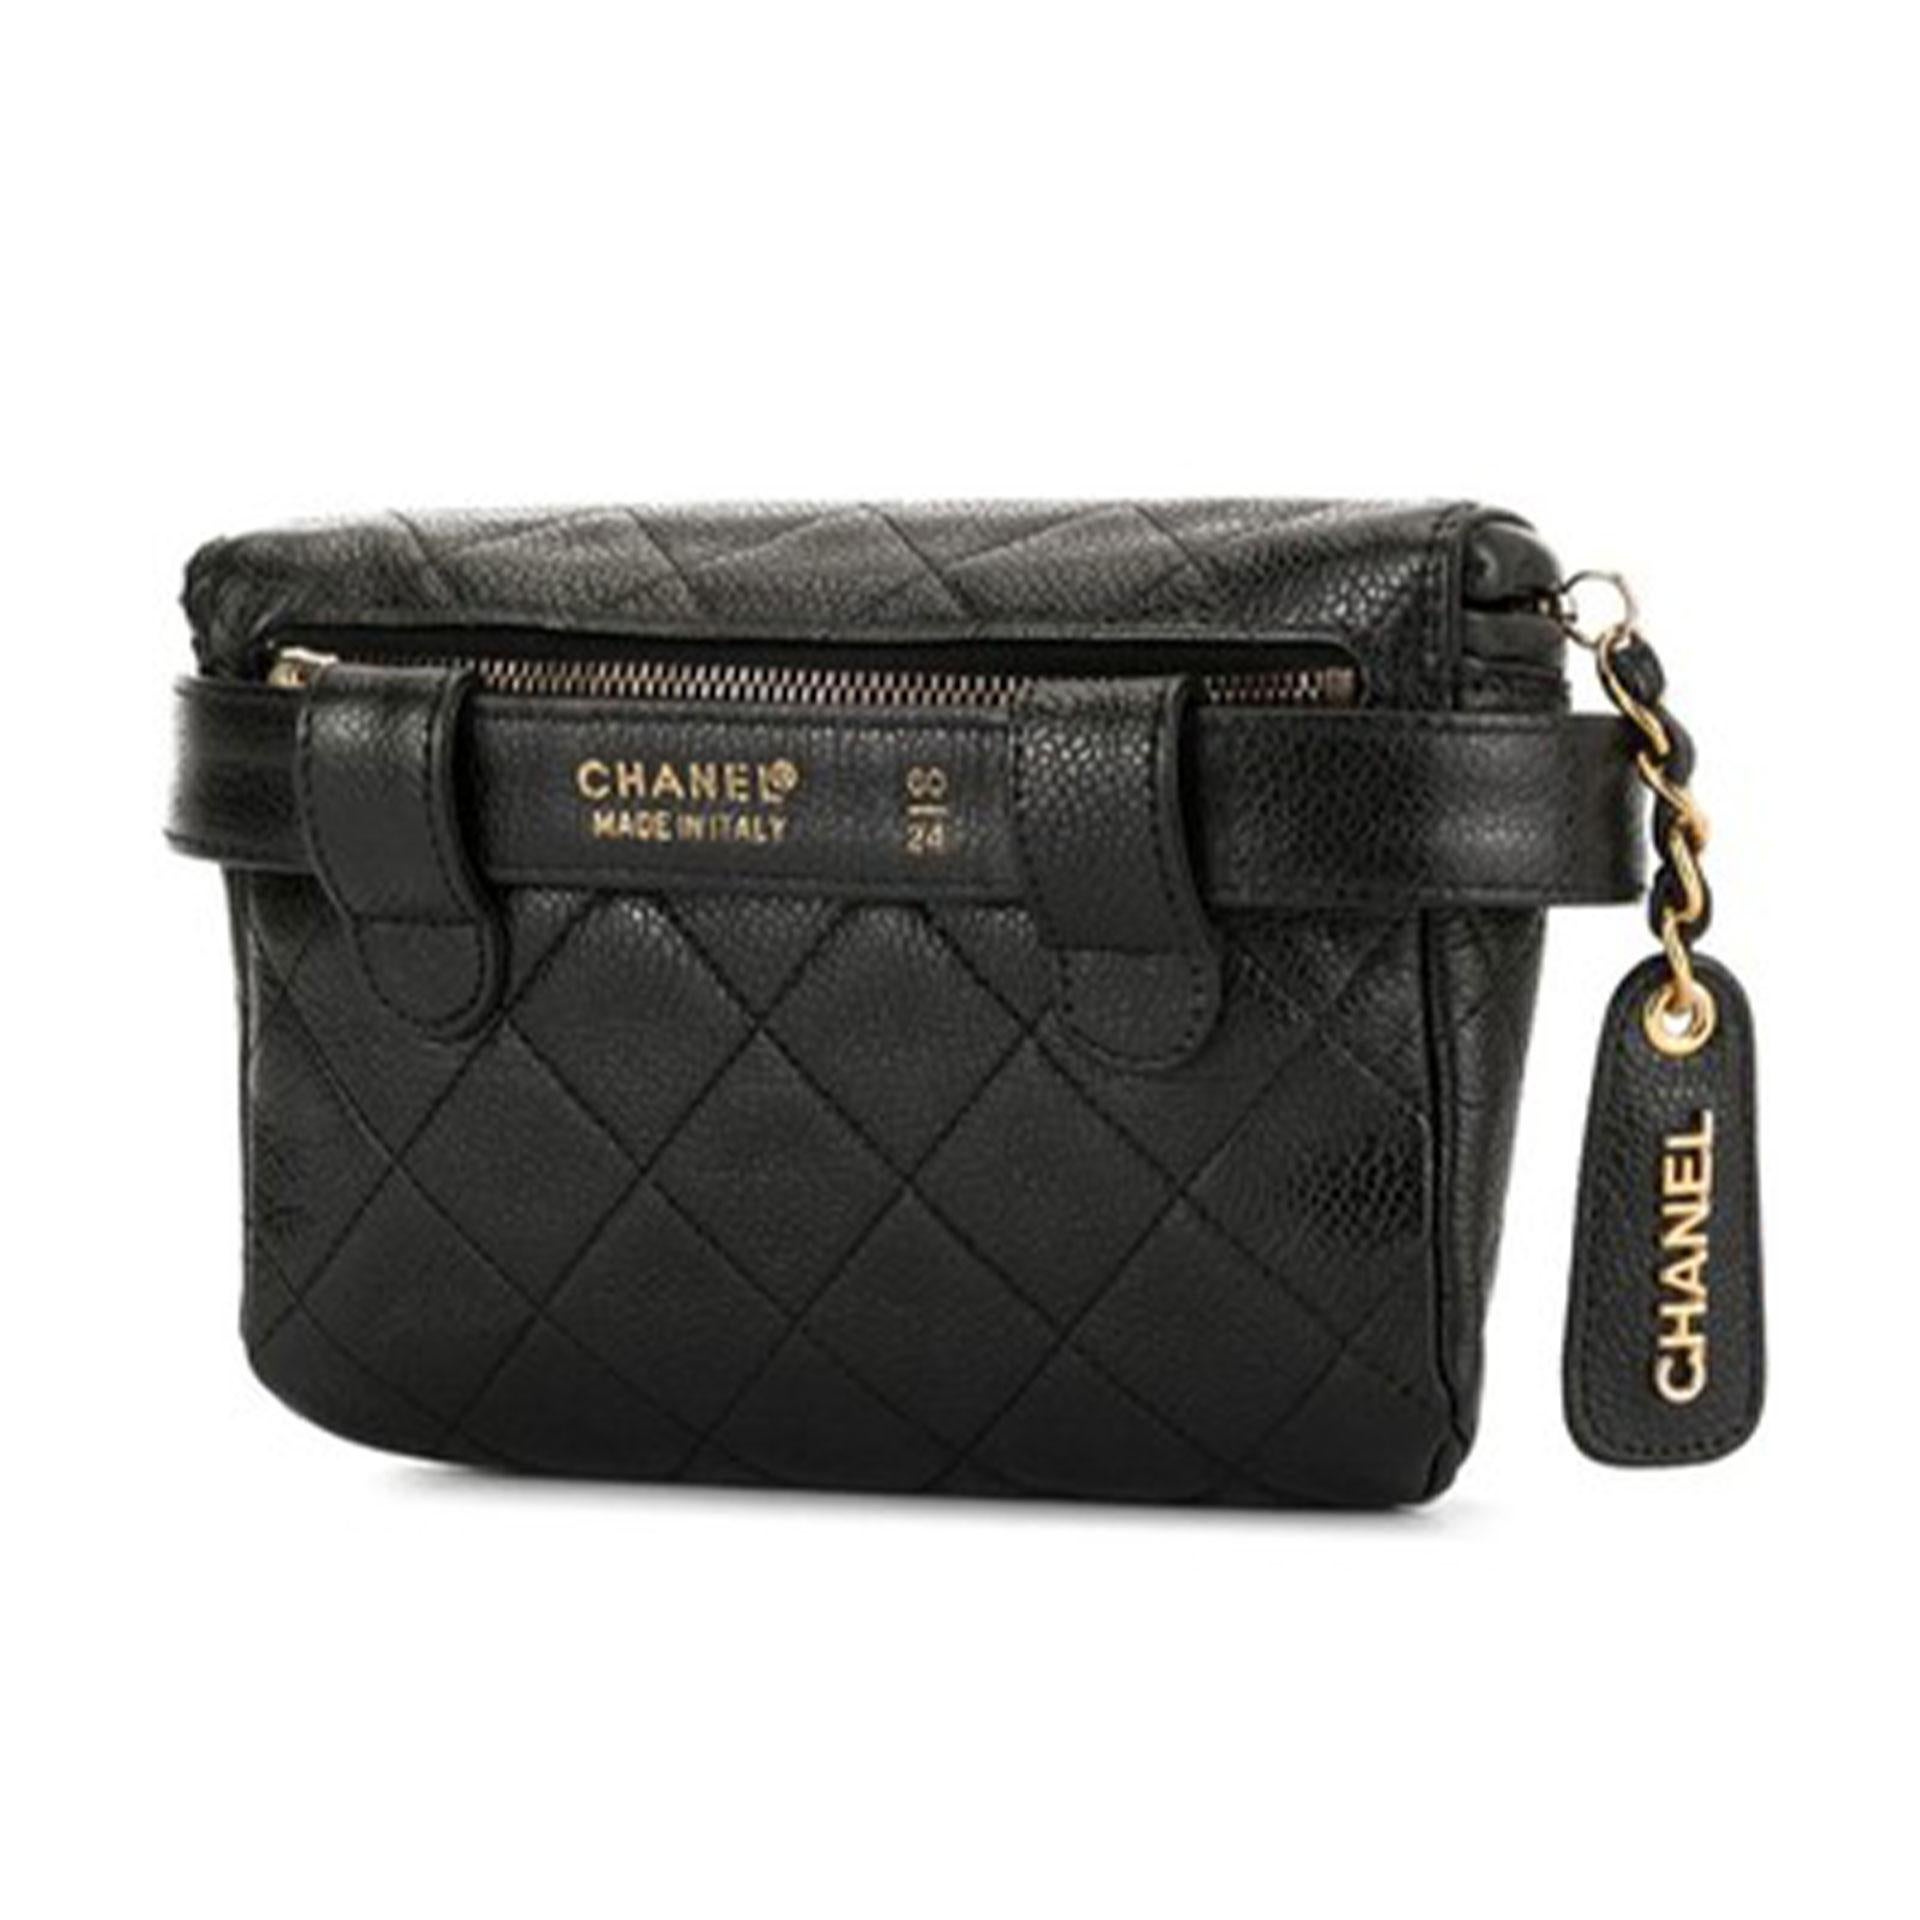 Women's or Men's Chanel Belt Rare Vintage 1995 Caviar Fanny Pack Waist Bum Black Leather Bag For Sale